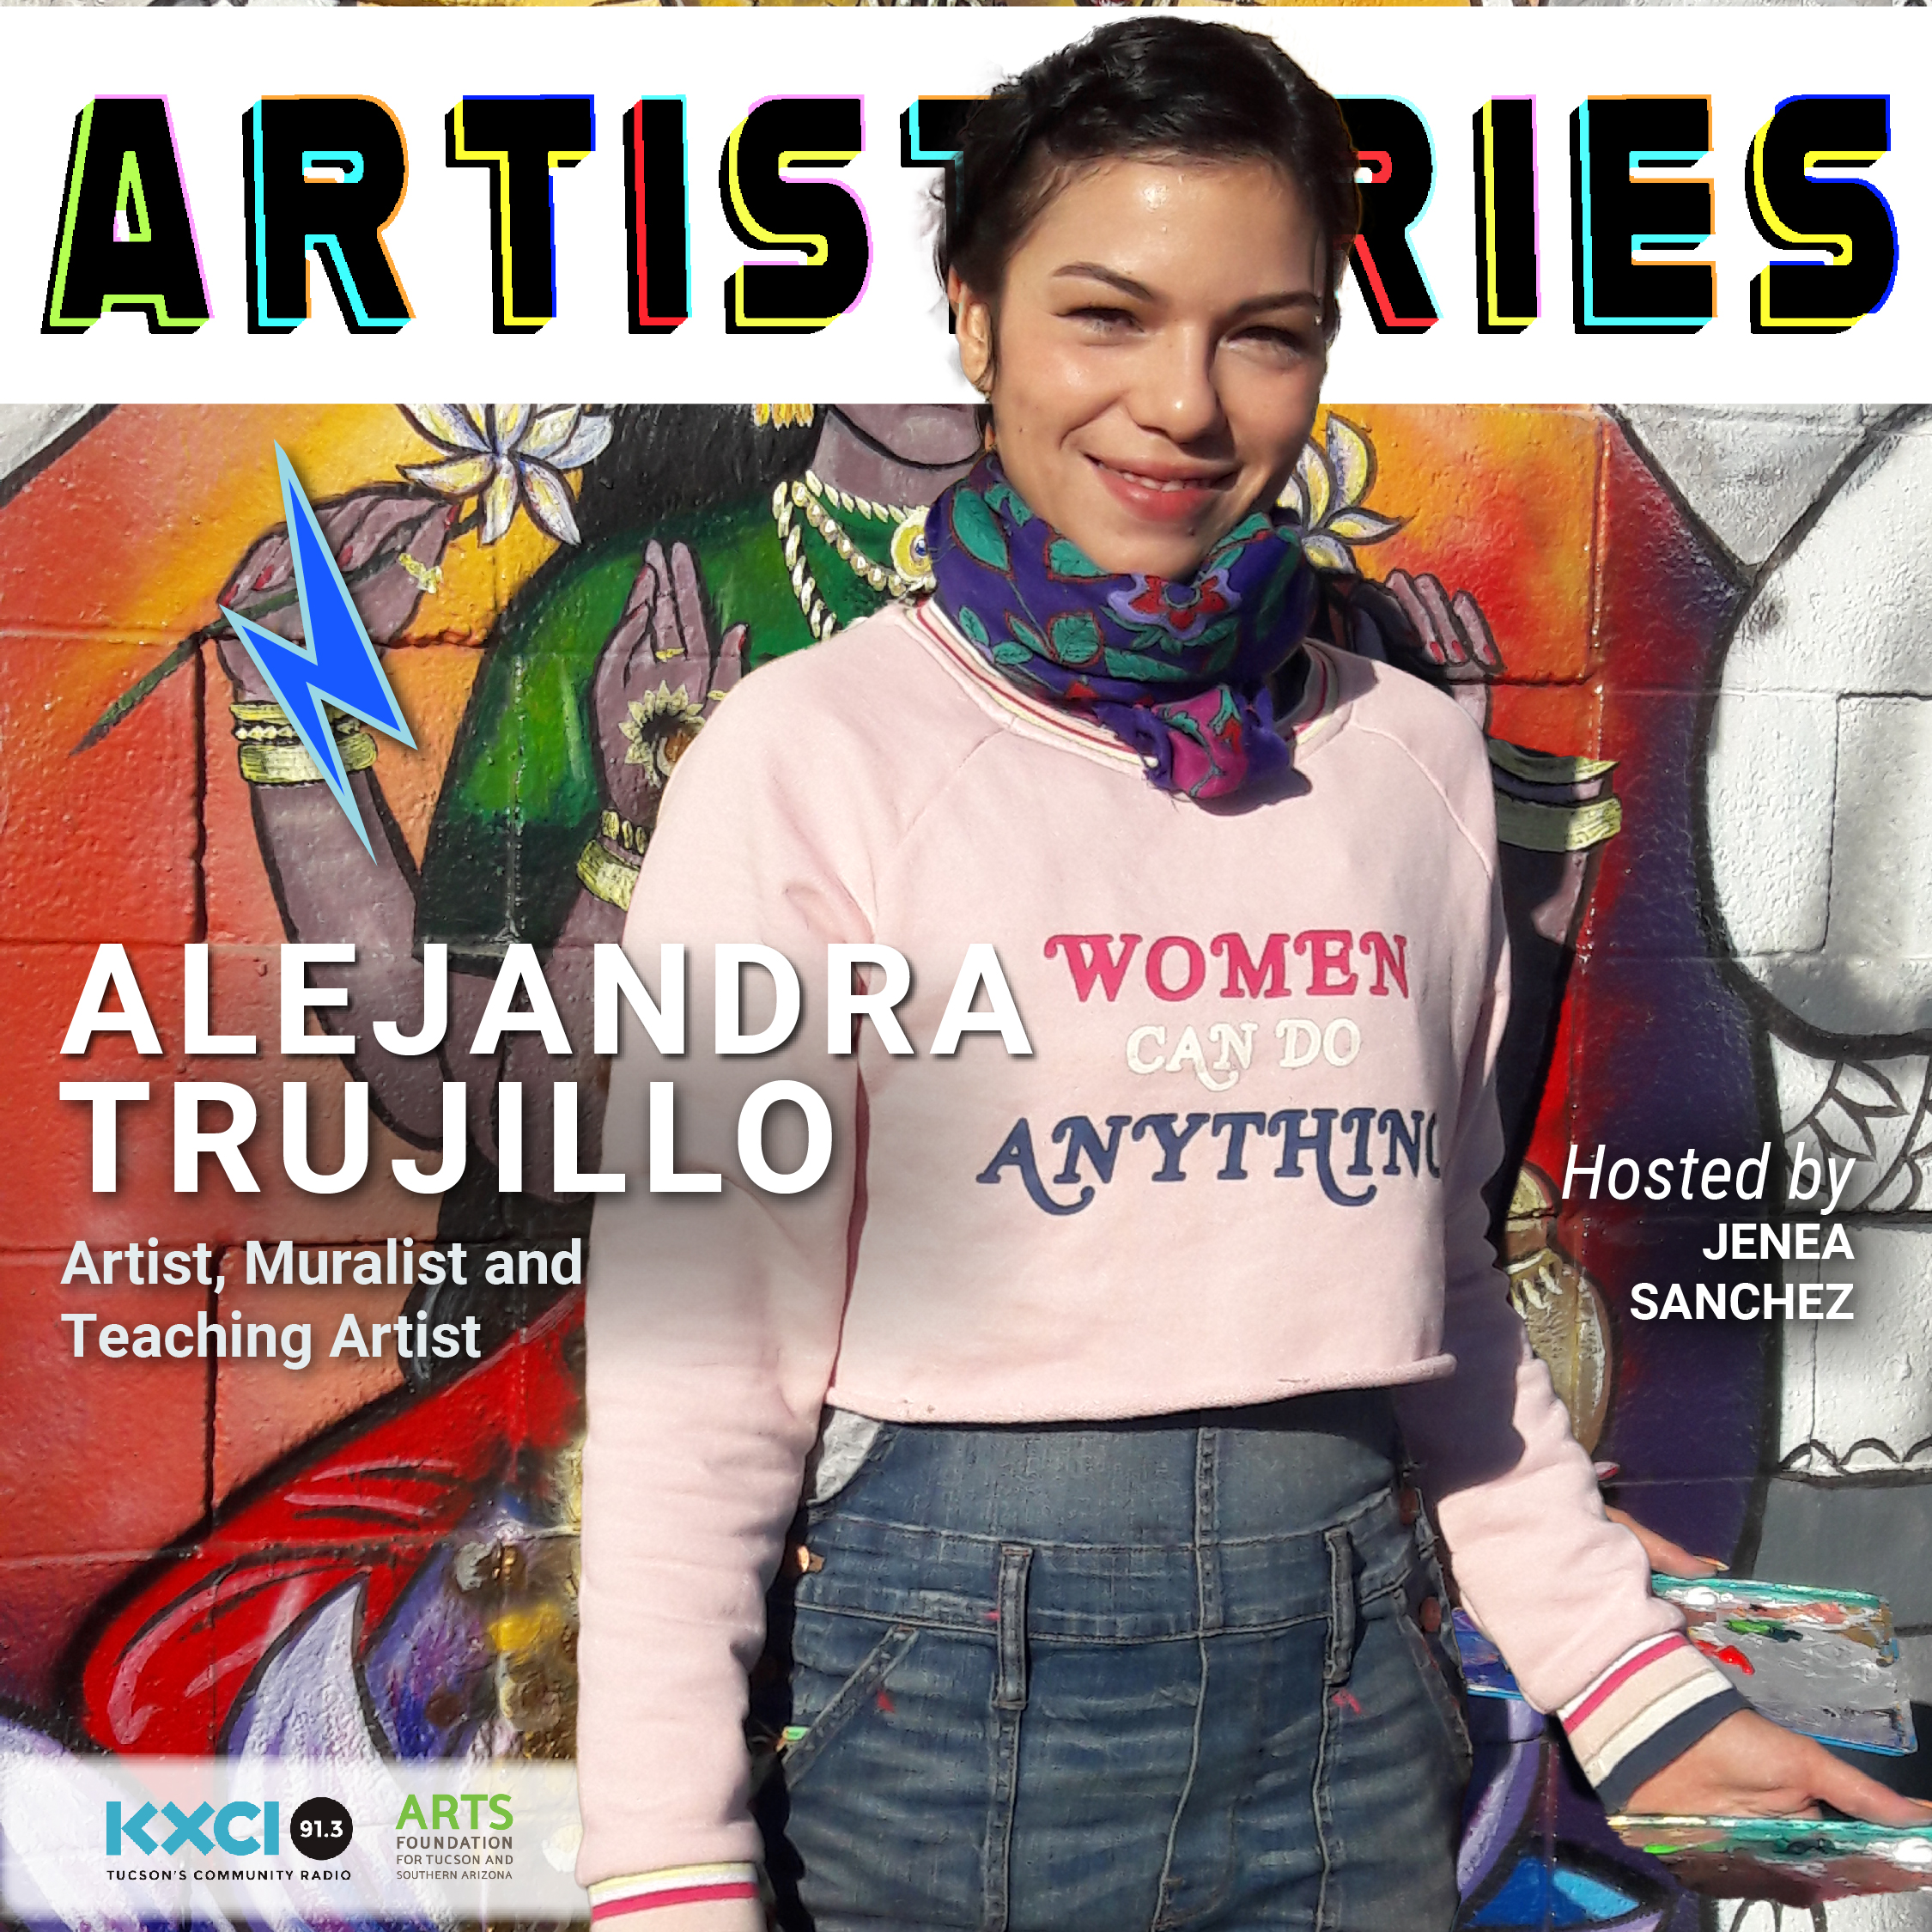 Alejandra Trujillo - Artist, Muralist and Teaching Artist